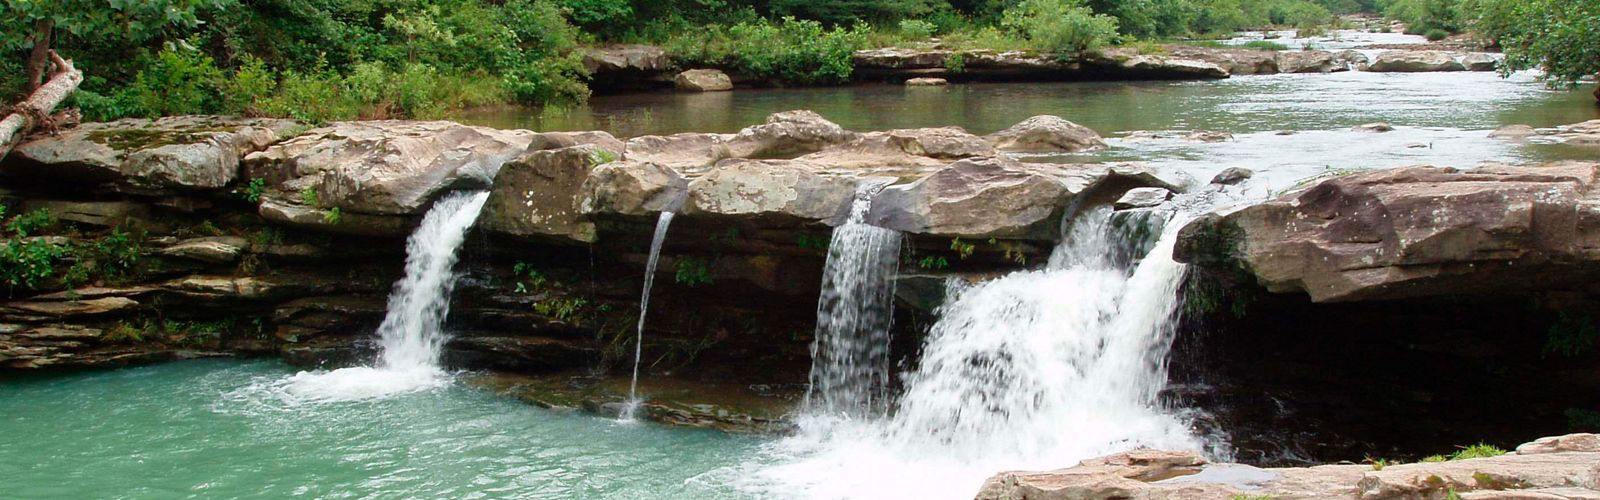 Freshwater waterfall over rocks.